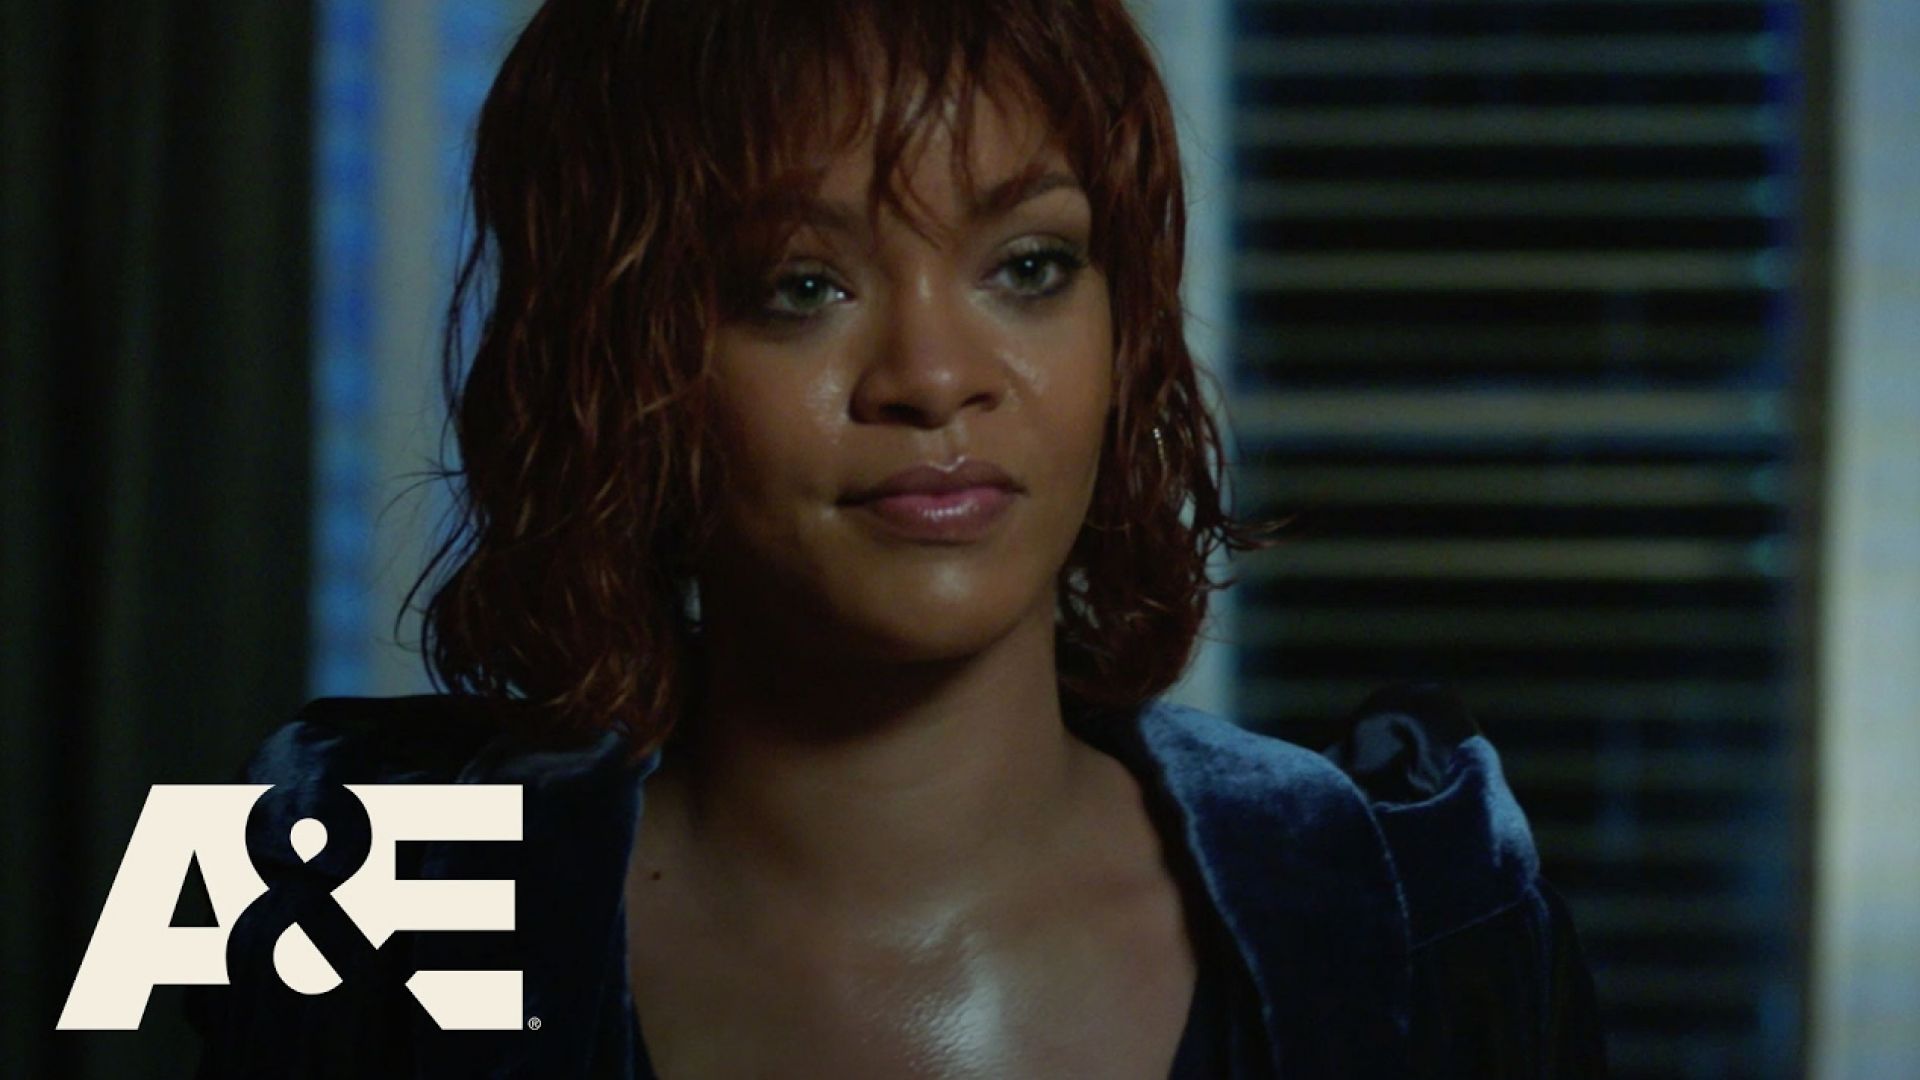 Bates Motel: Rihanna As Marion Crane First Look